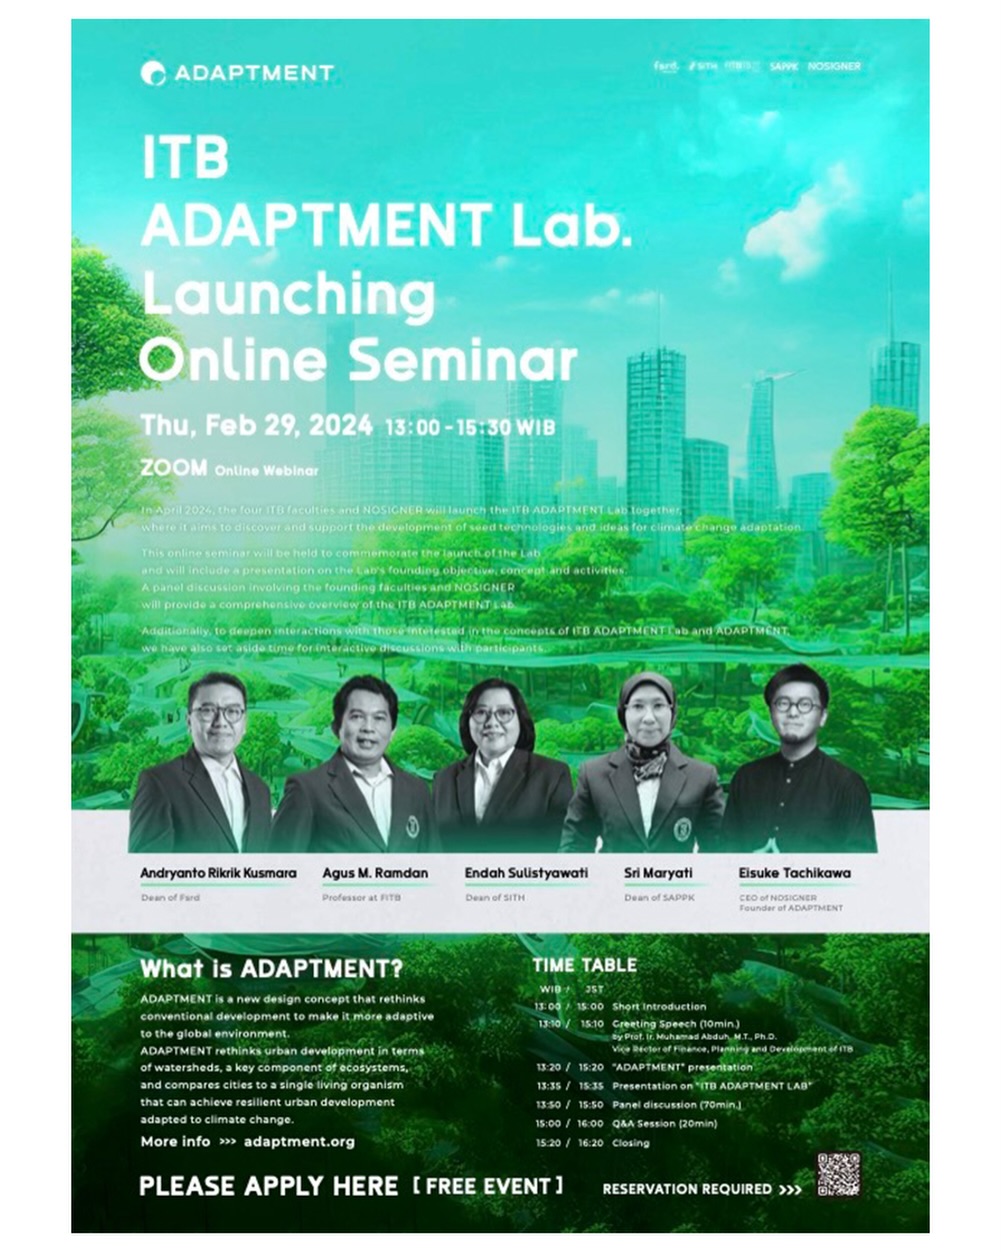 ITB Adaptment lab. Launching Online Seminar